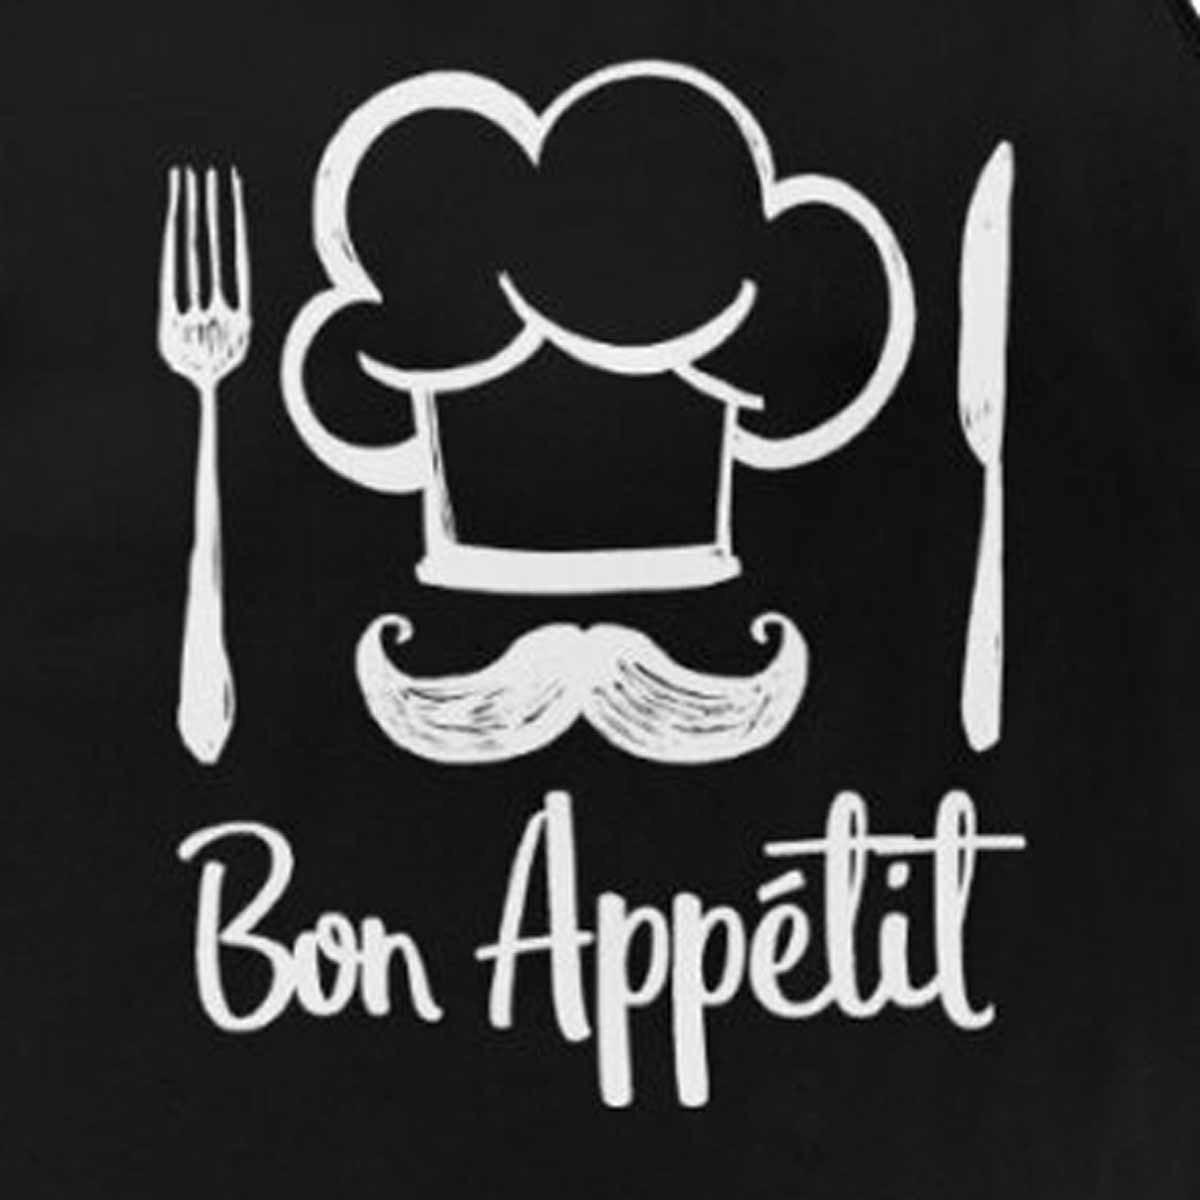 Apron for adults with tie "Bon apptit"